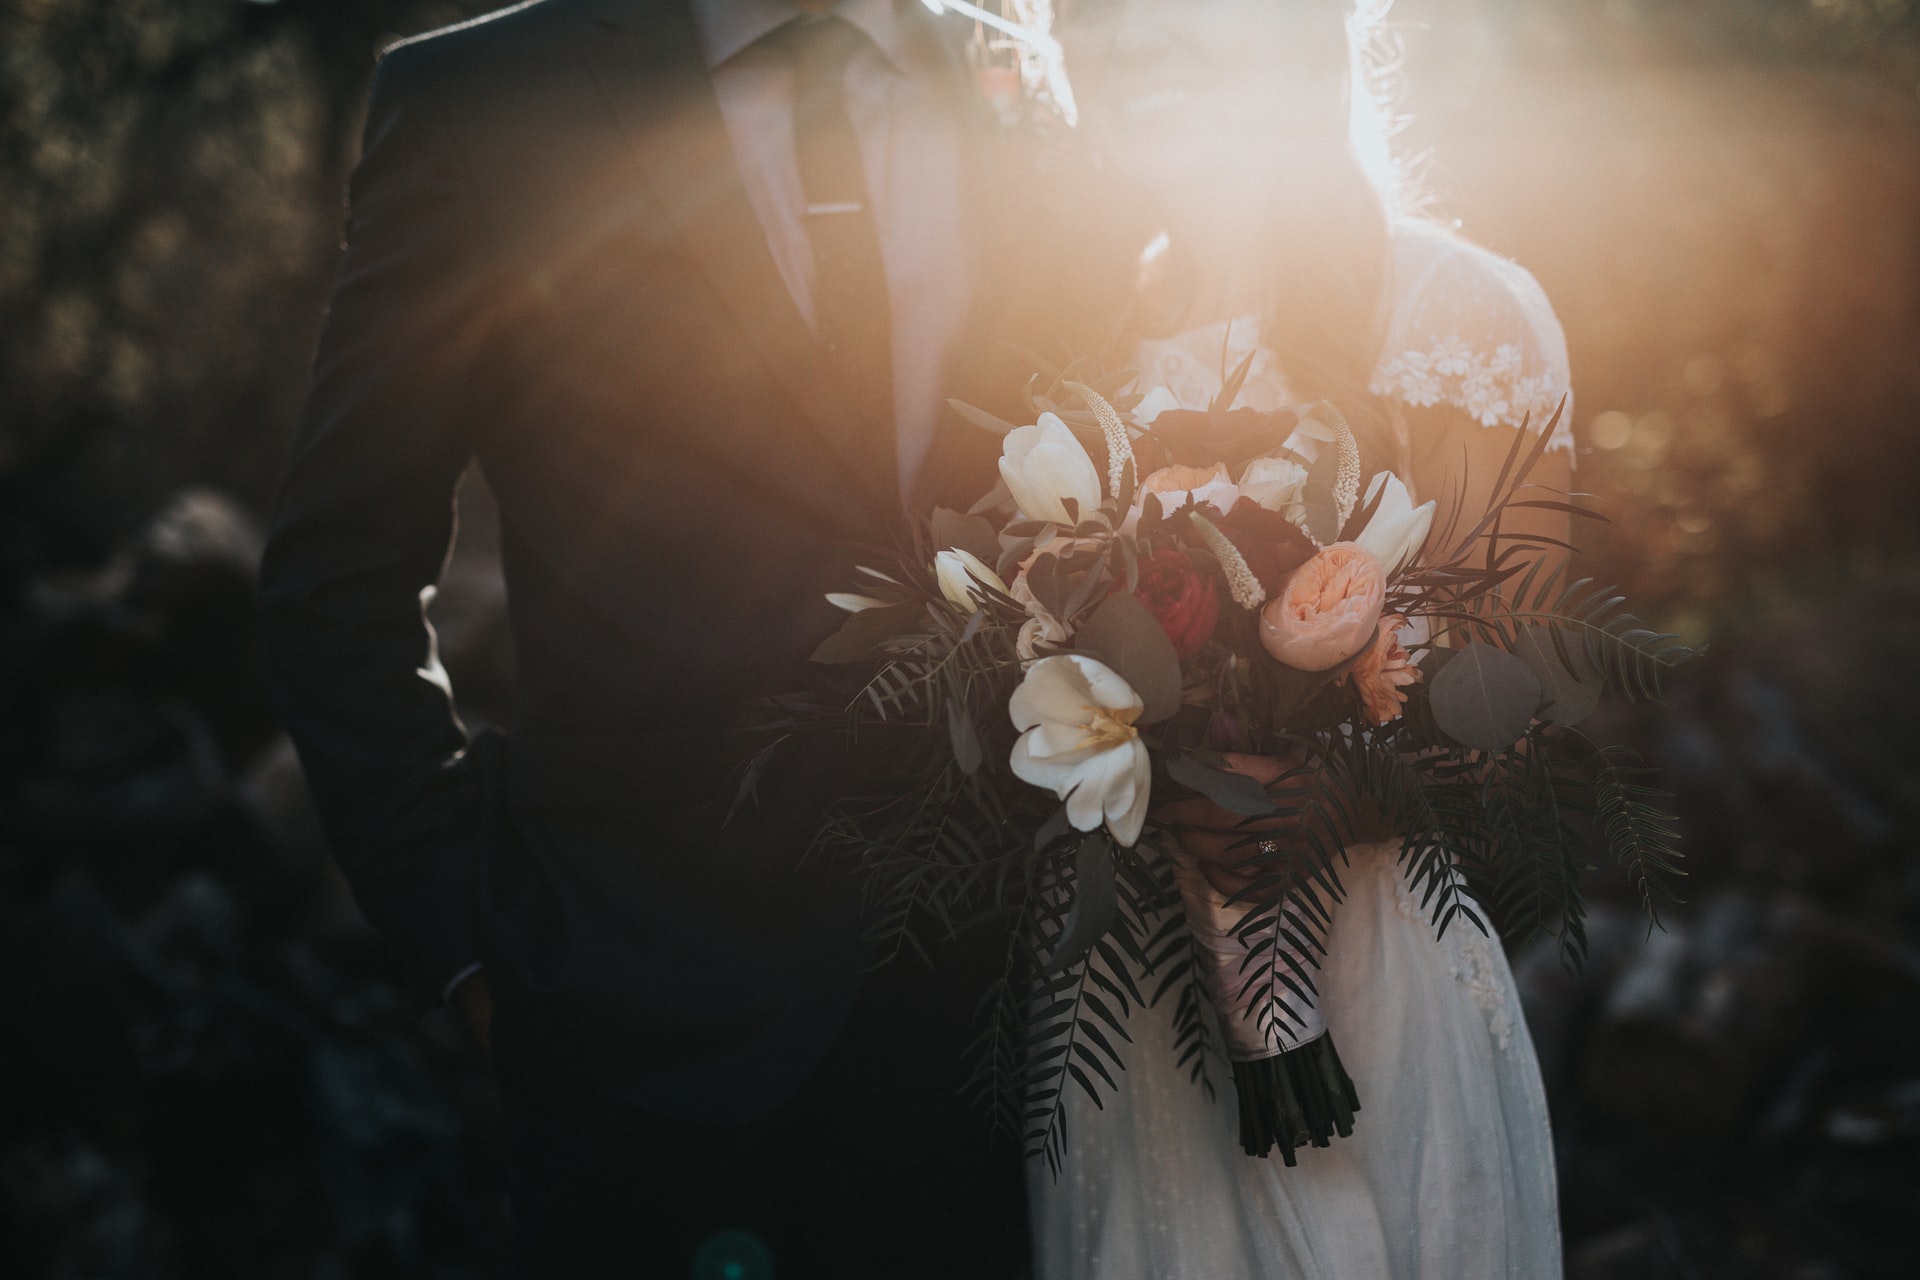 Natural light at weddings - photography tips